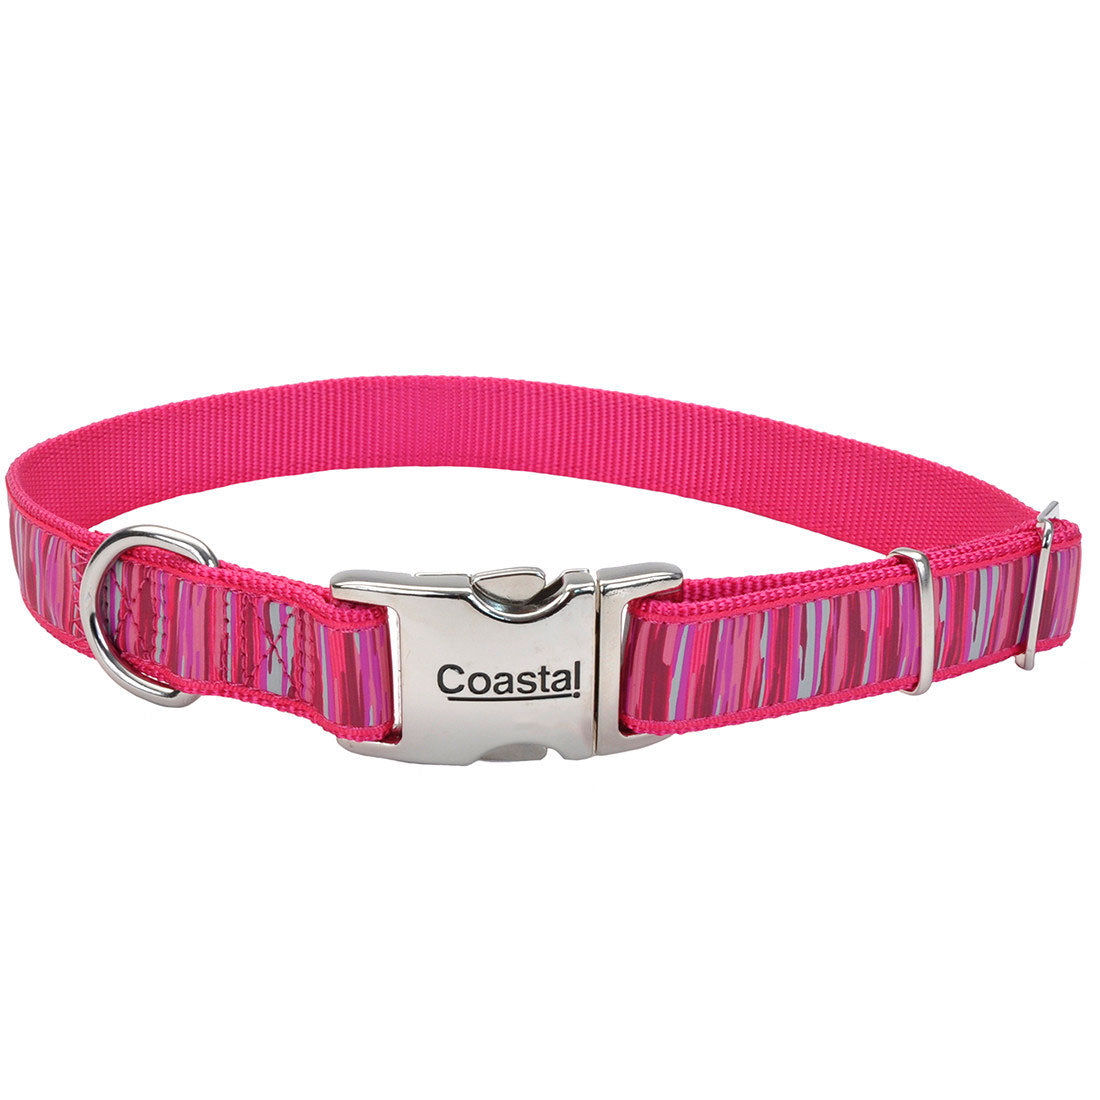 Coastal Ribbon Adjustable Dog Collar with Metal Clip Pink Flamingo Large